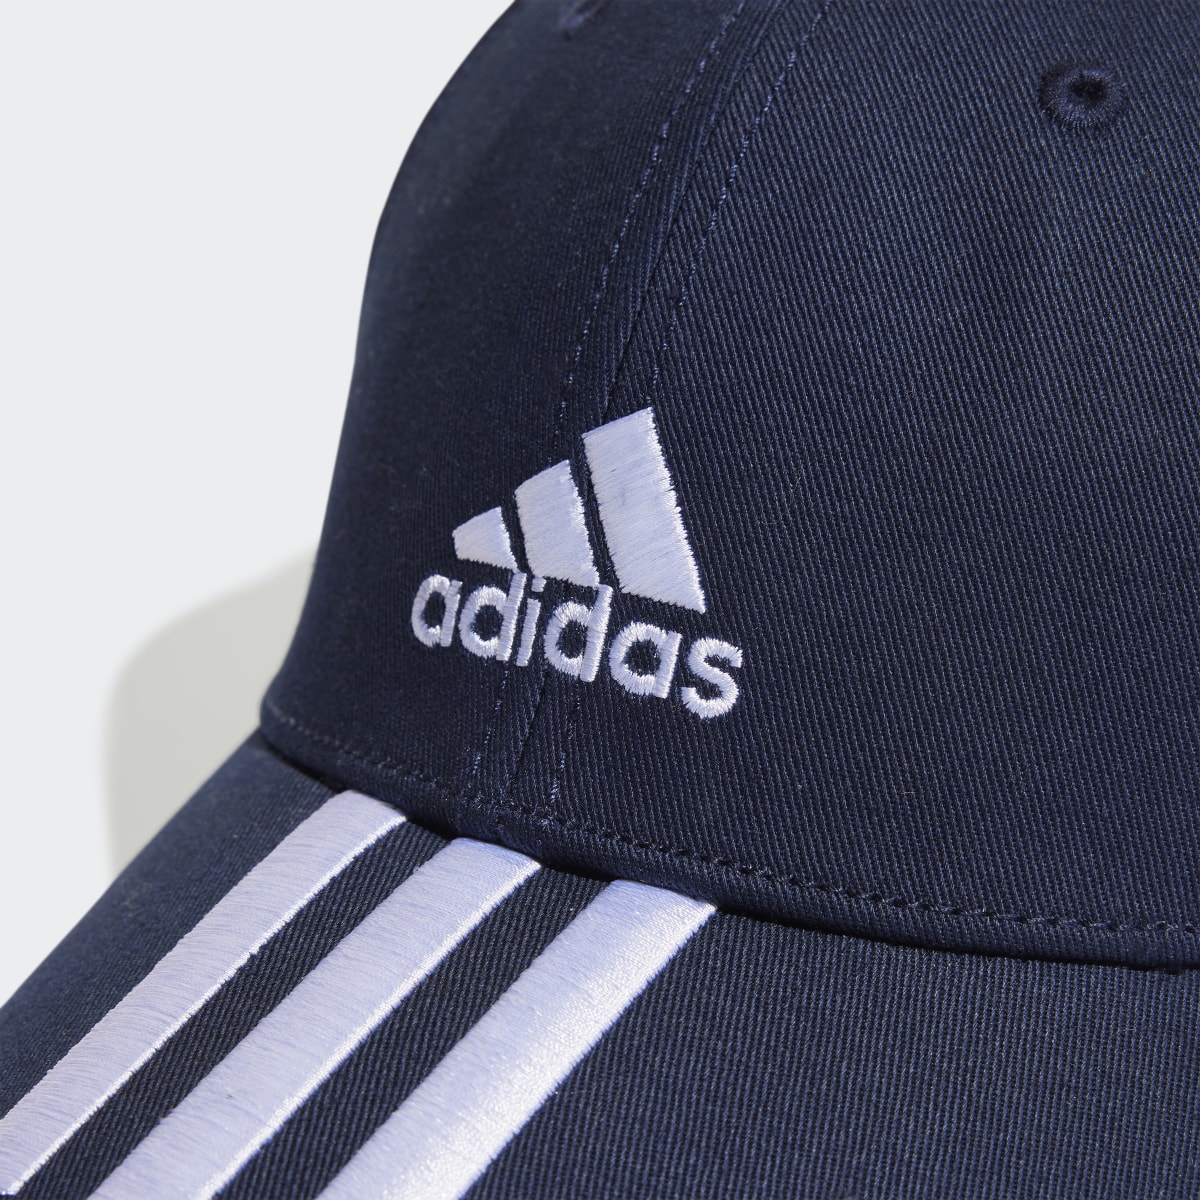 Adidas BASEBALL 3-STRIPES TWILL CAP. 4